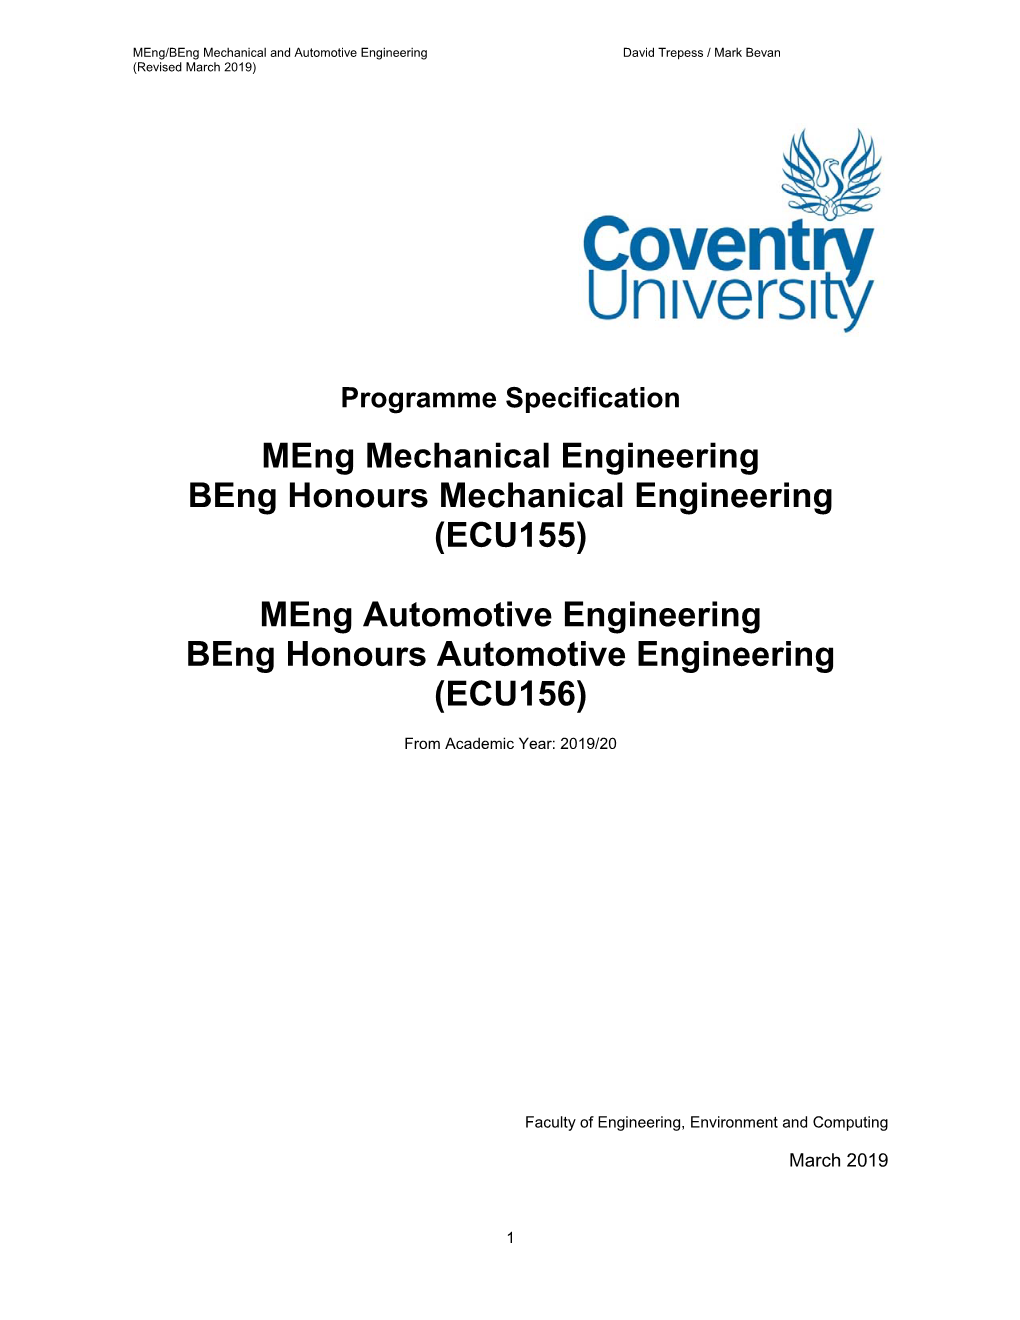 (ECU155) Meng Automotive Engineering Beng Honours